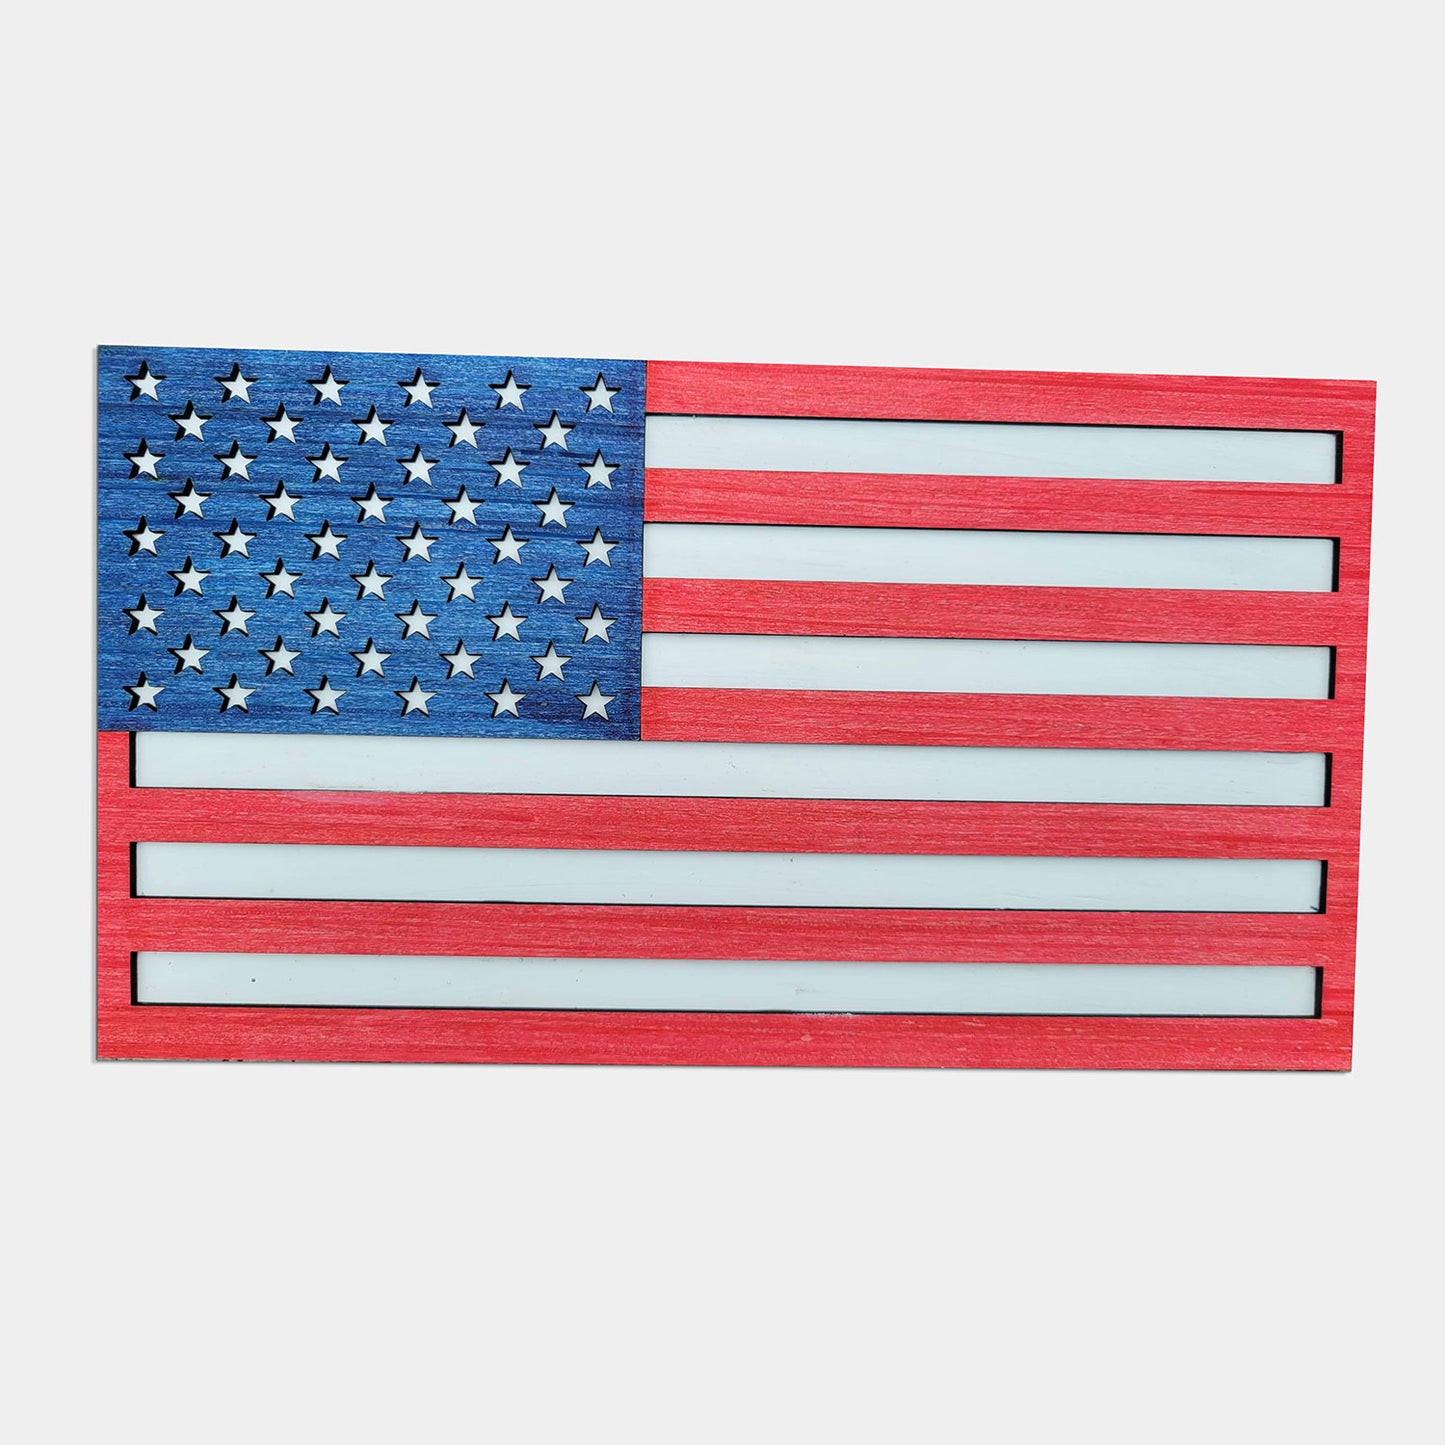 Patriotic Layered American Flag Decoration